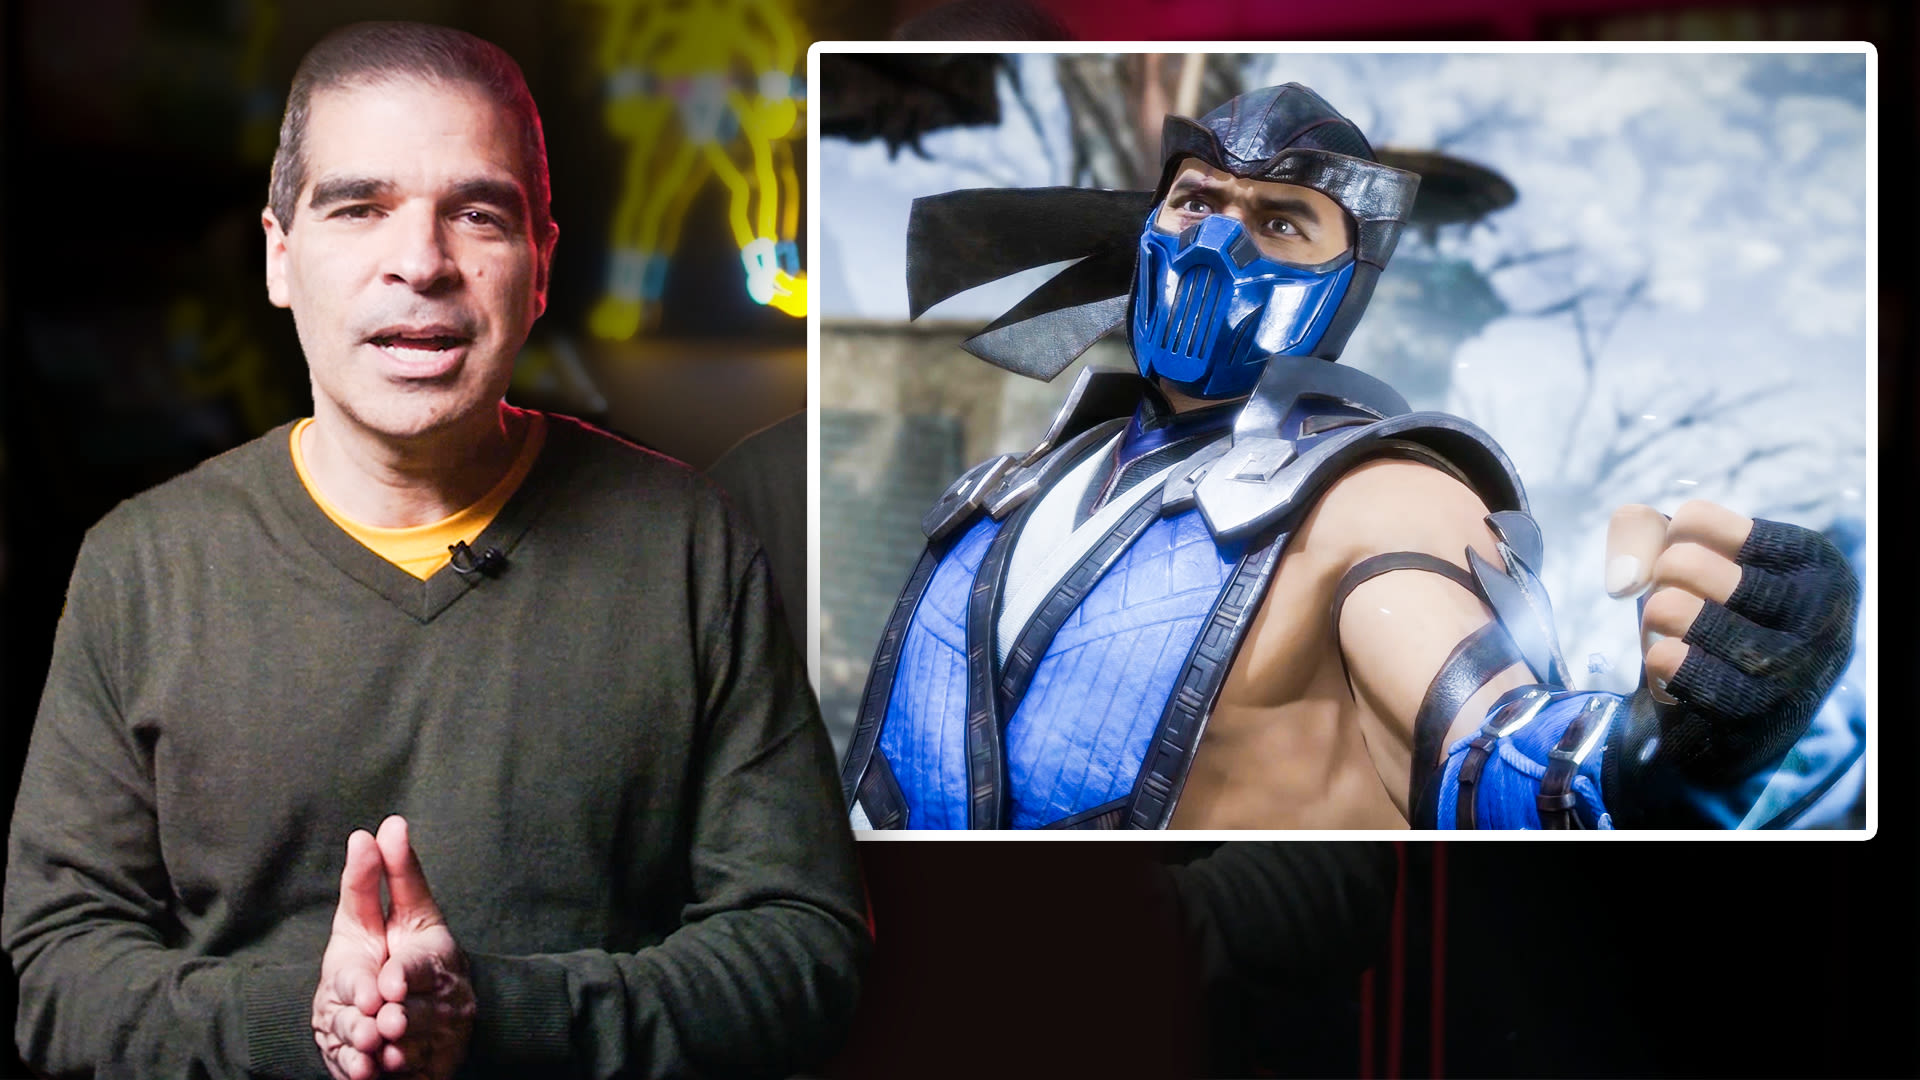 Mortal Kombat' Creator Ed Boon Explains How New Fatalities Are Made